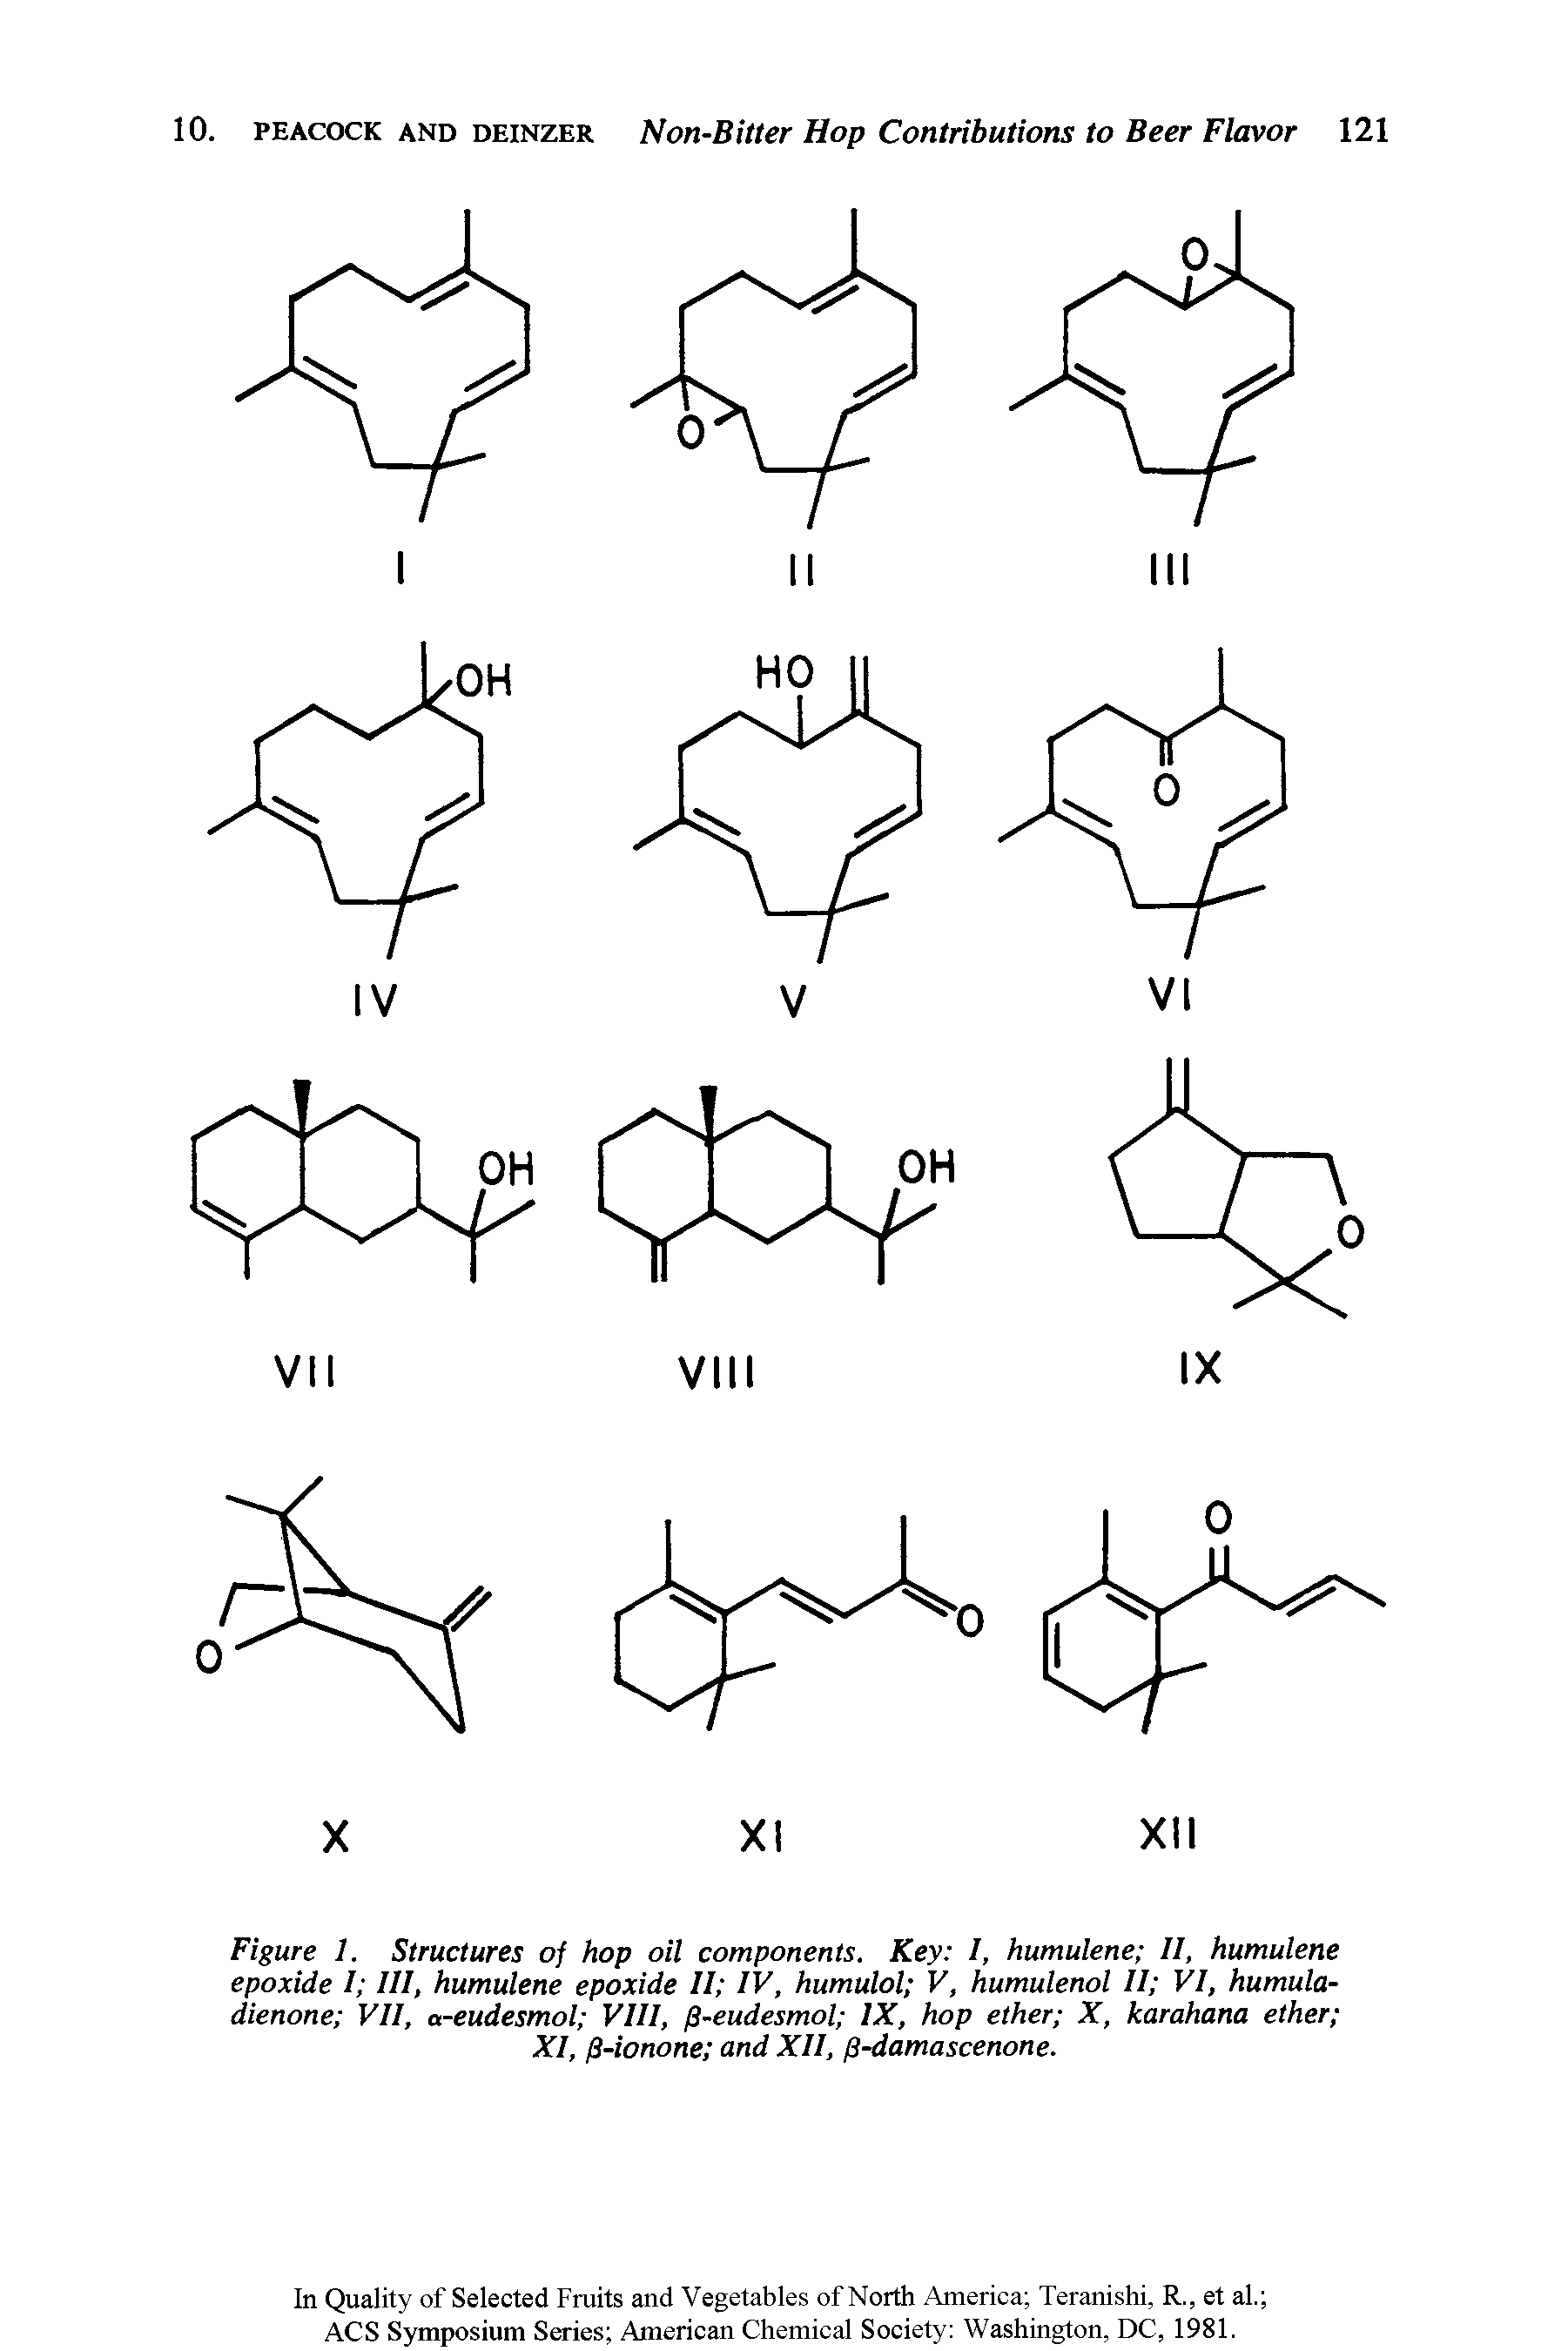 Figure 1. Structures of hop oil components. Key I, humulene II, humulene epoxide I III, humulene epoxide II IV, humulol V, humulenol II VI, humula-dienone VII, a-eudesmol VIII, -eudesmol IX, hop ether X, karahana ether XI, p-ionone and XII, j3-damascenone.